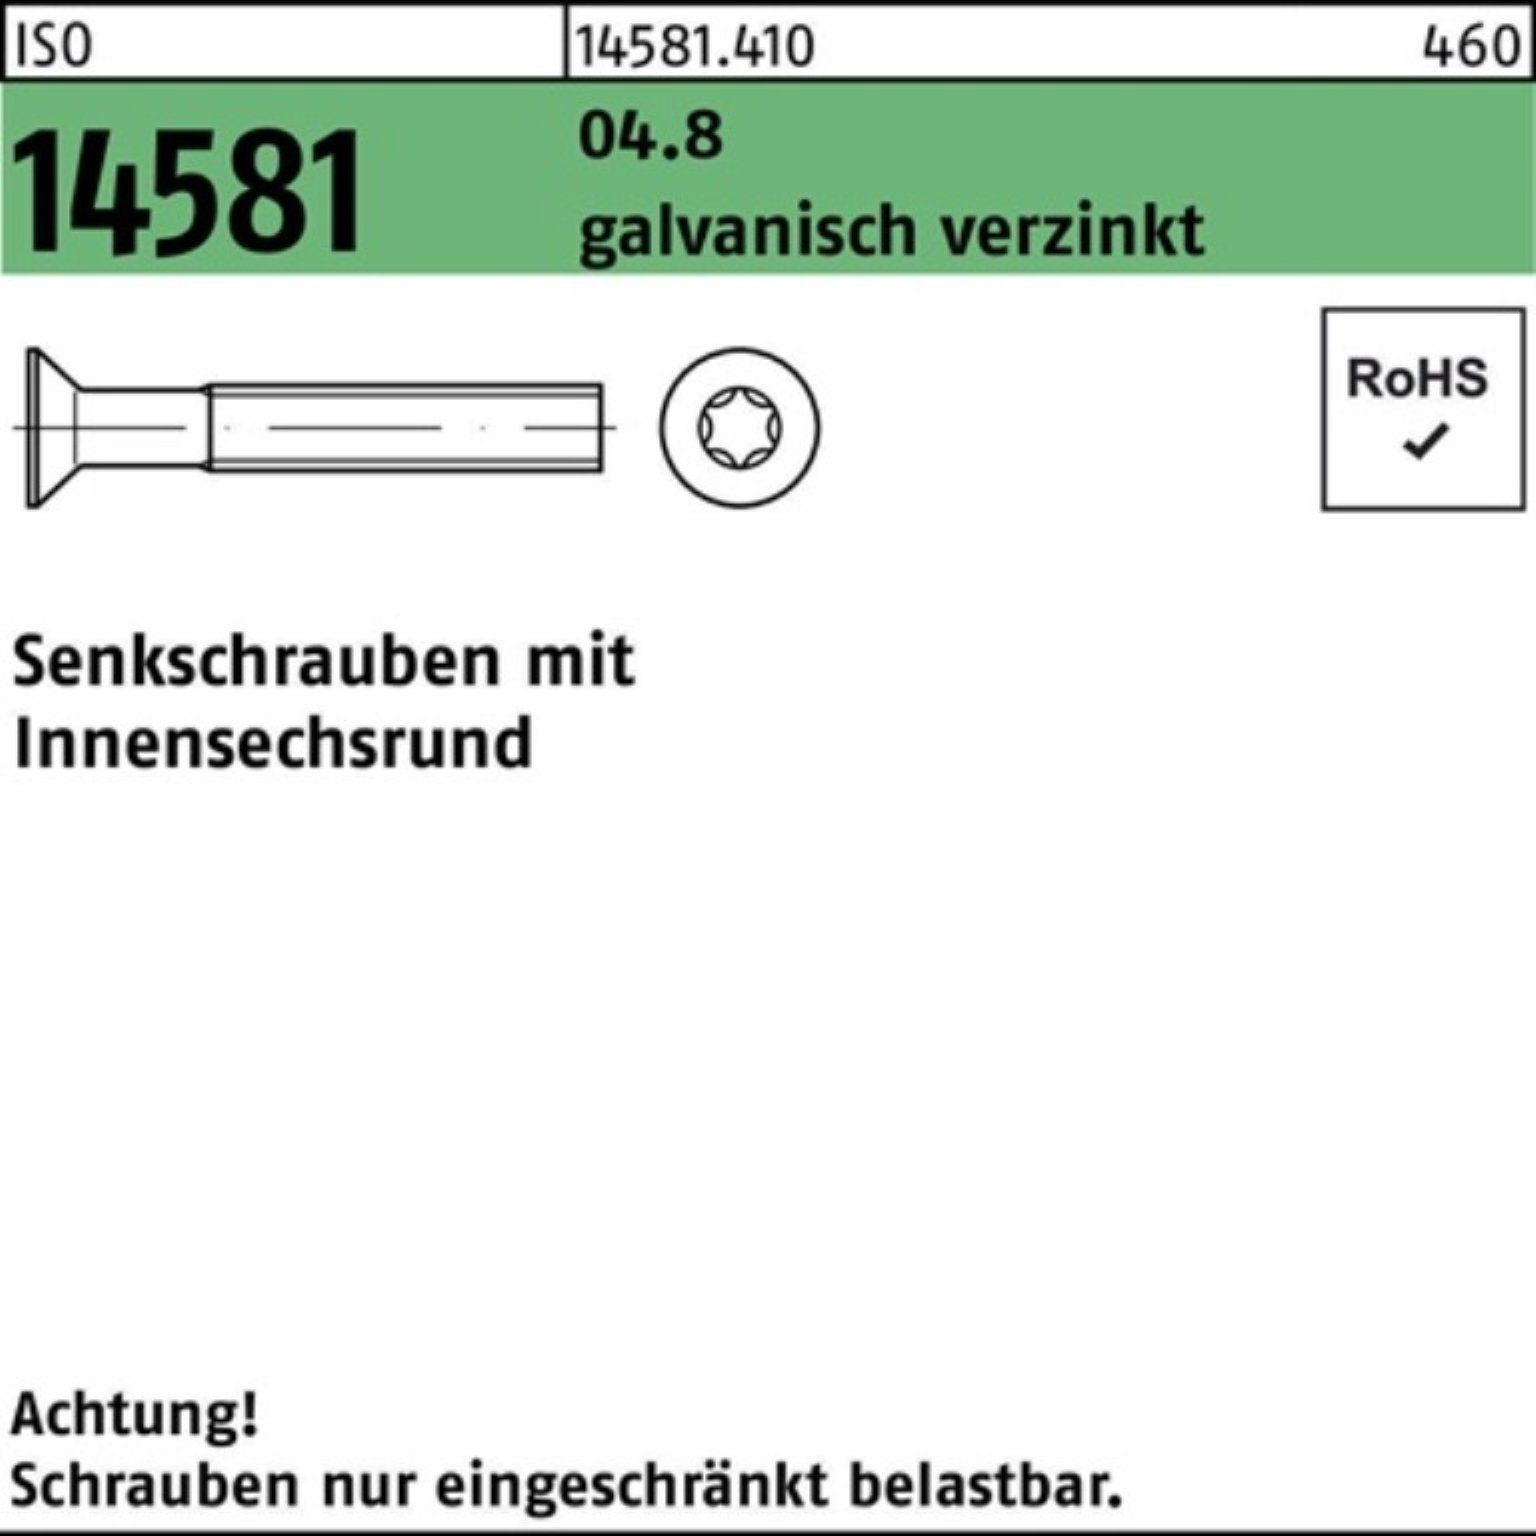 Reyher Senkschraube 1000er Pack Senkschraube ISO 14581 ISR M5x16 T25 04.8 galv.verz. 1000S